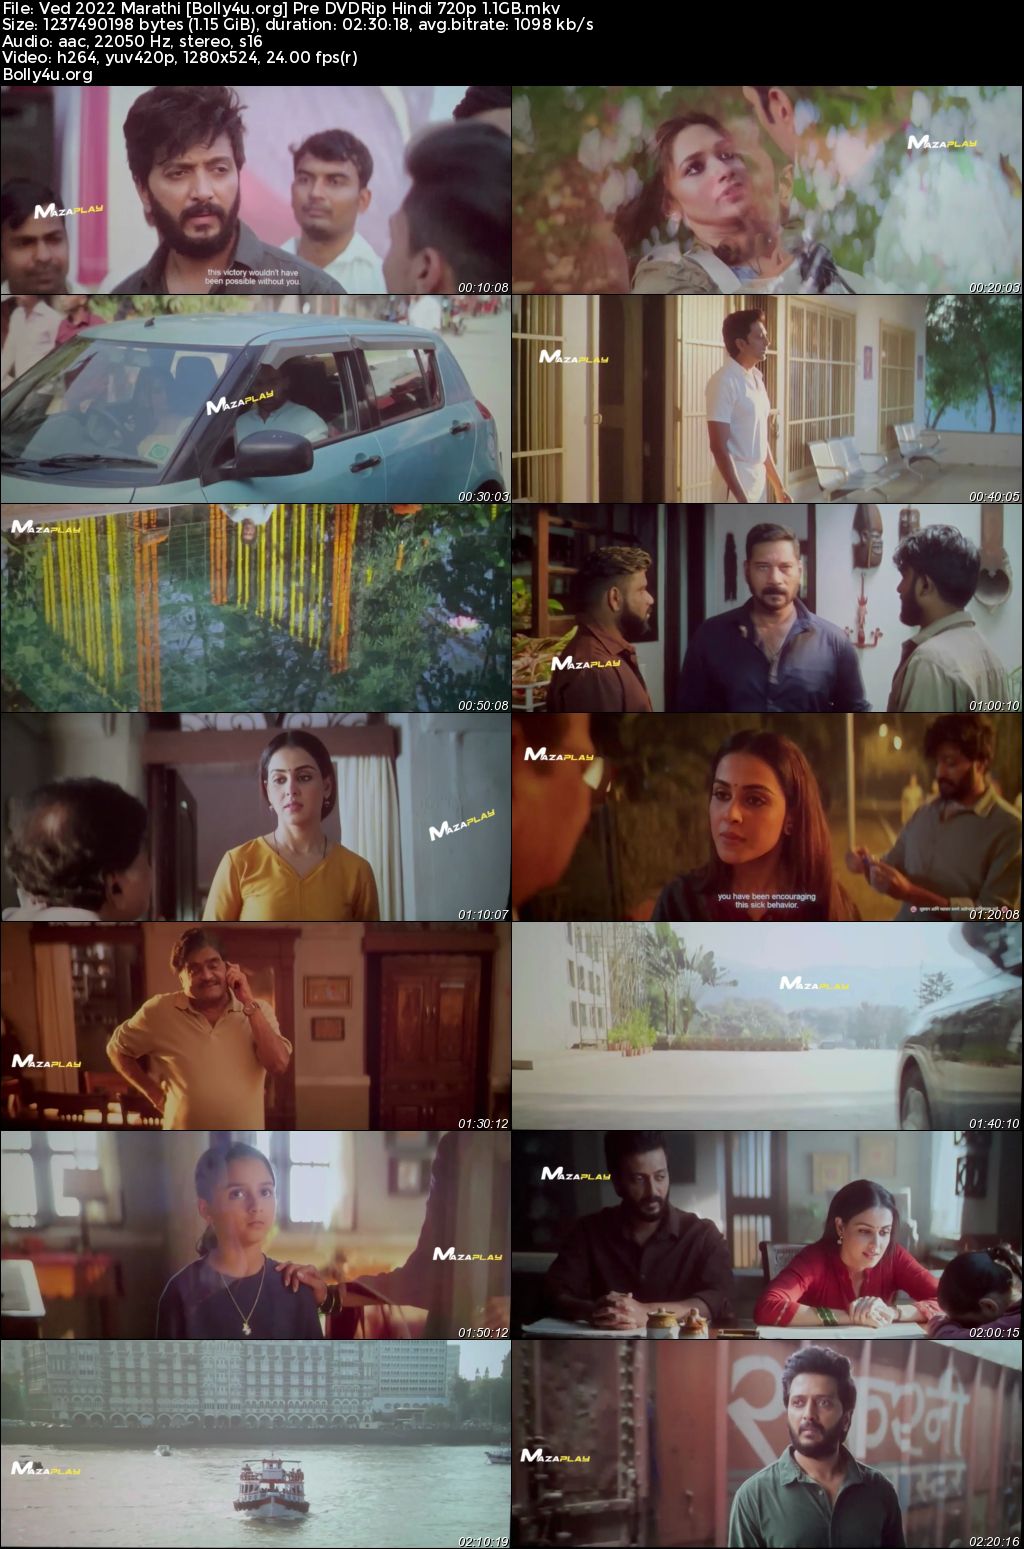 Ved 2022 Pre DVDRip Marathi Full Movie Download 720p 480p